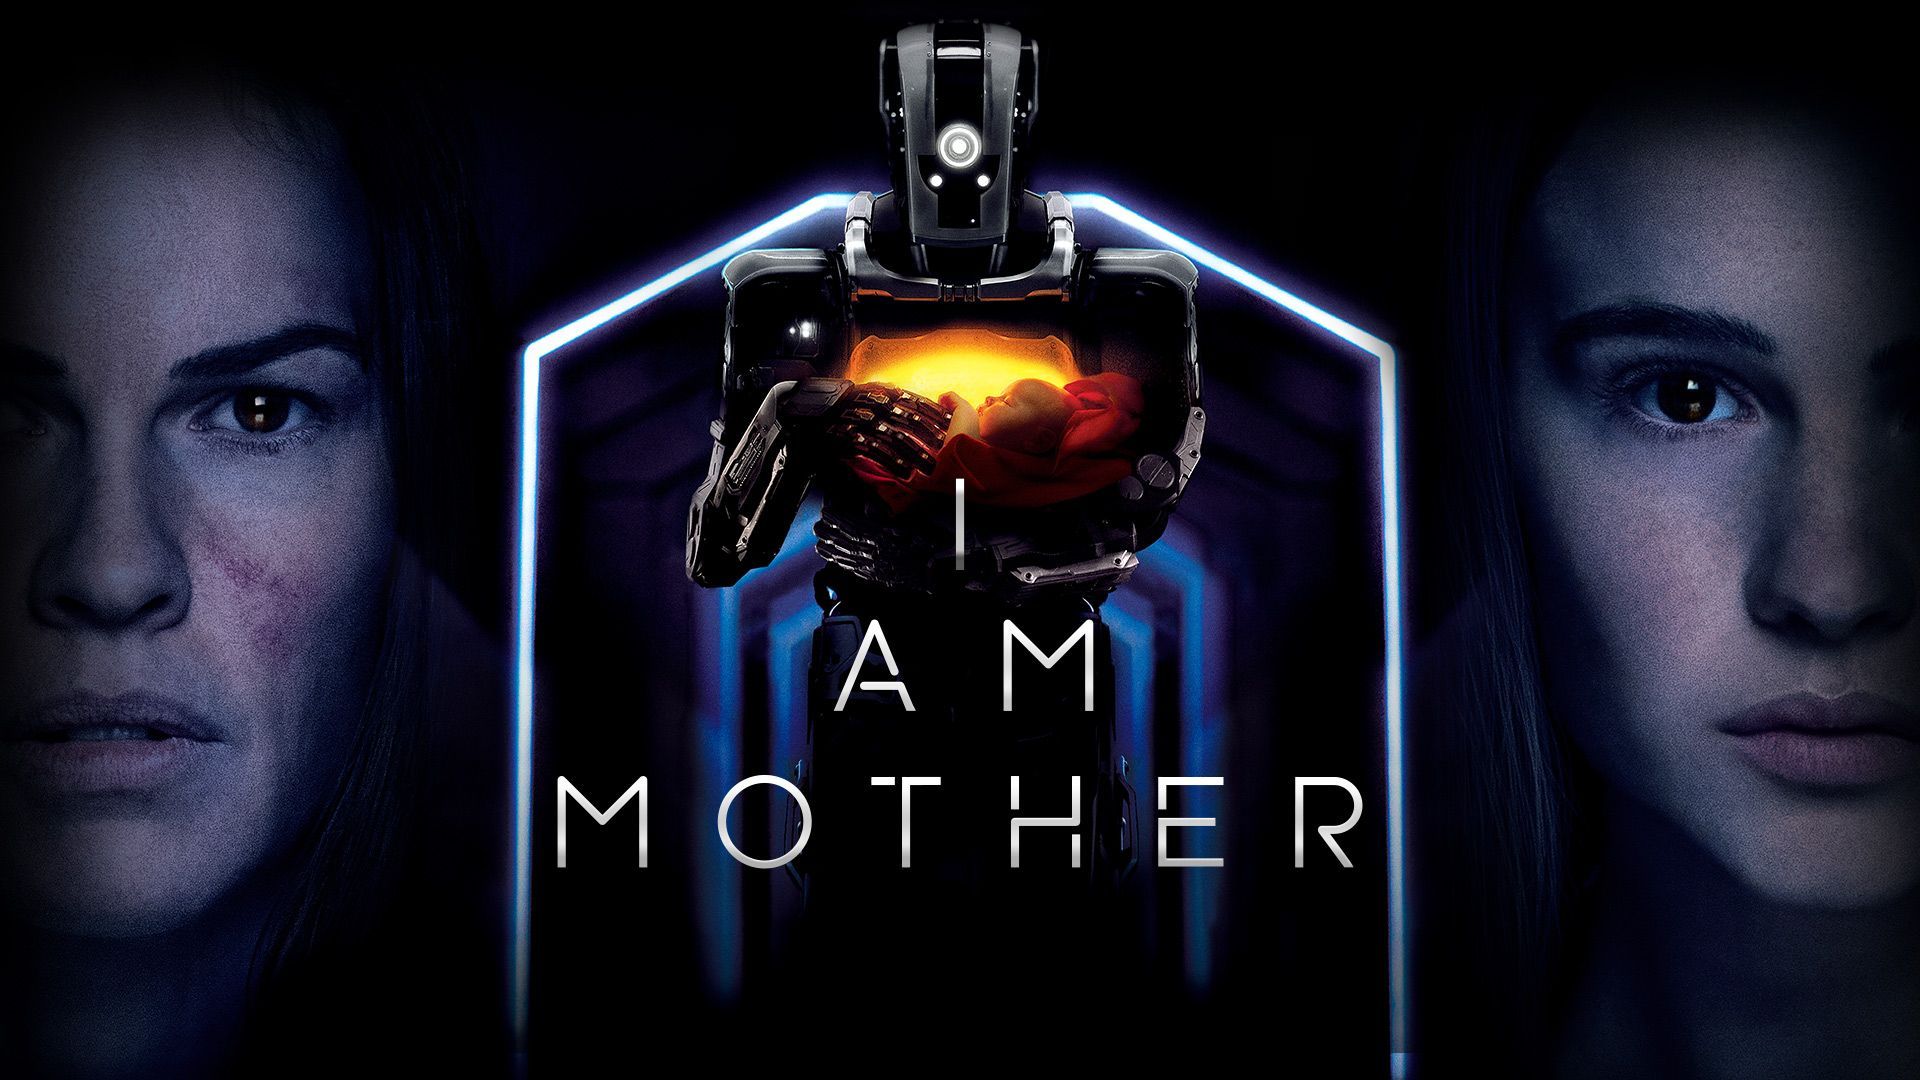 I Am Mother (2019) ★★★★